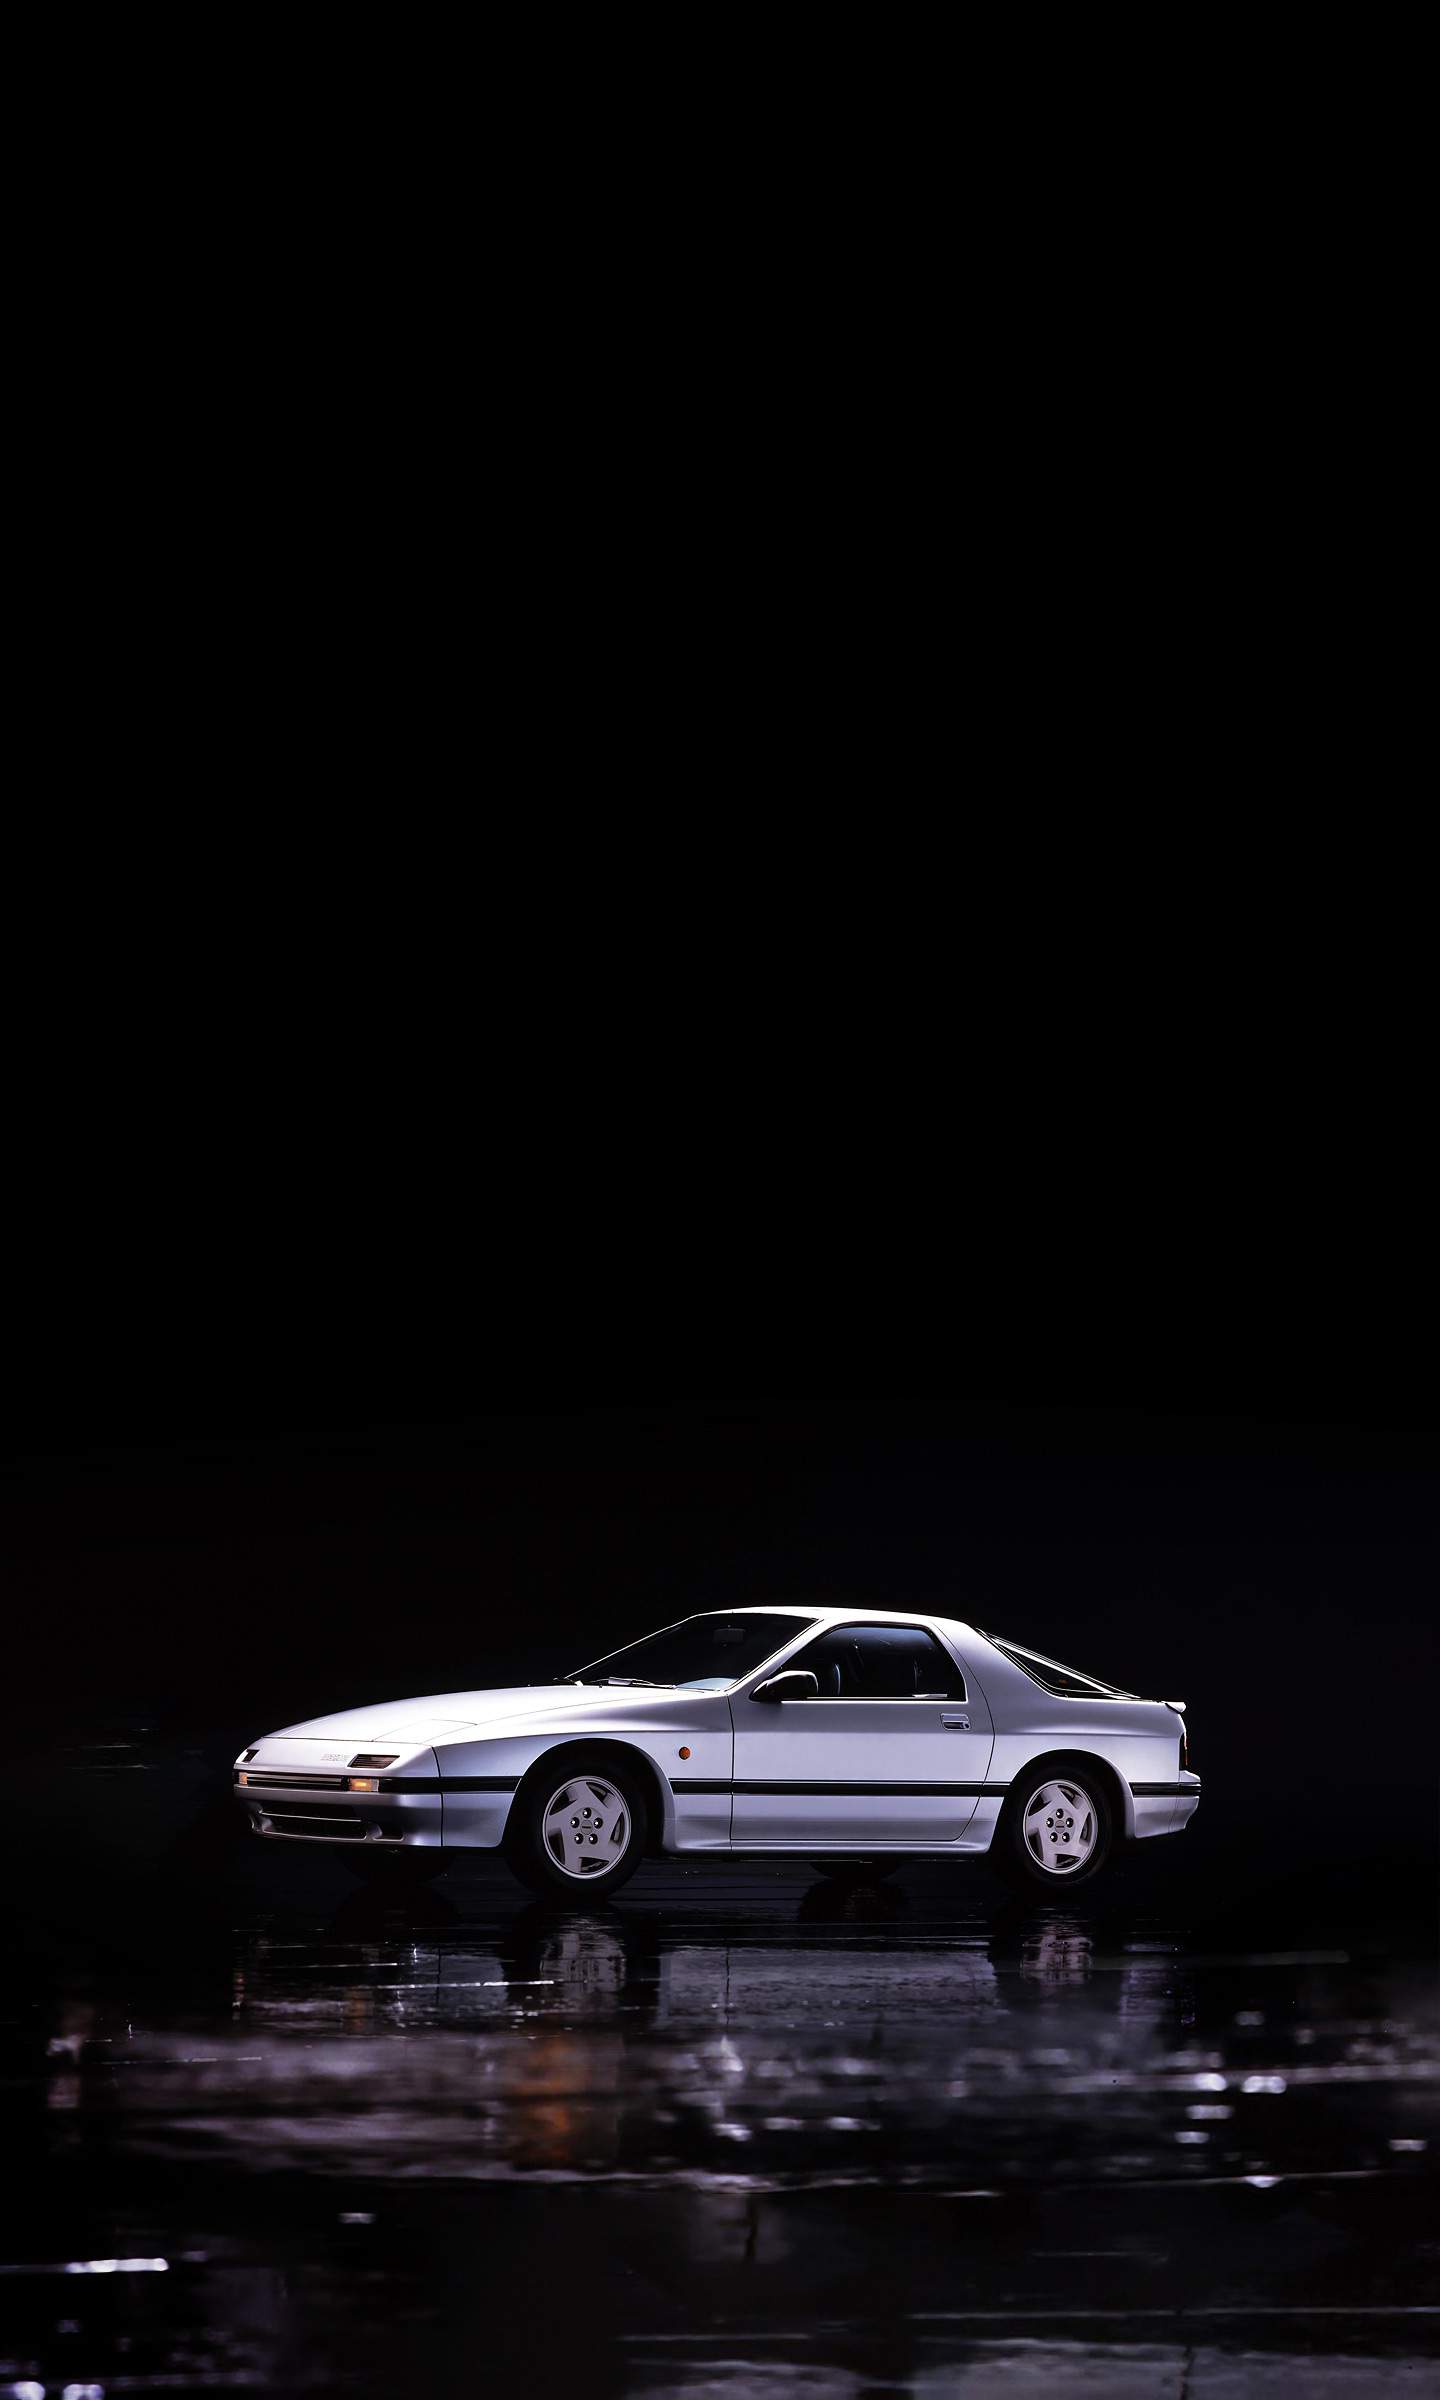  1985 Mazda RX-7 Wallpaper.